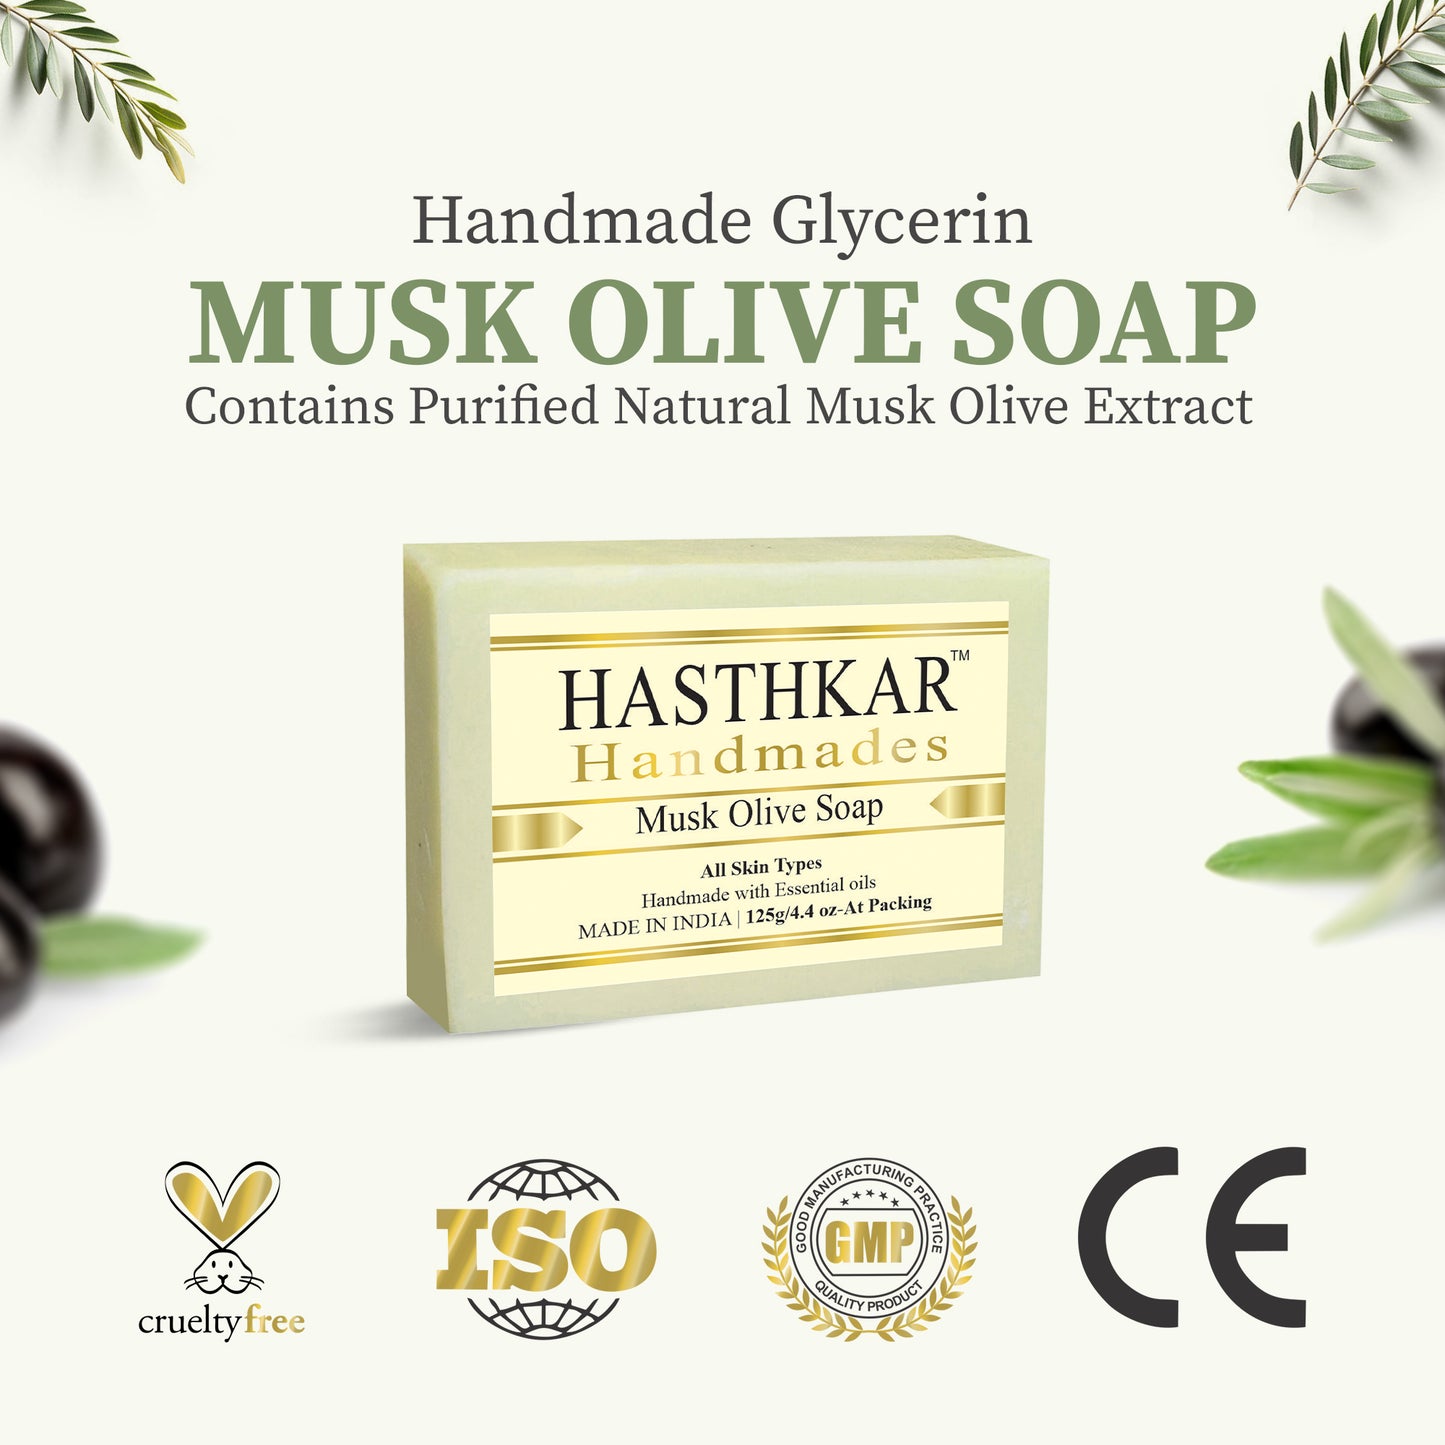 Hasthkar Handmades Glycerine Musk olive Soap 125gm Pack of 5